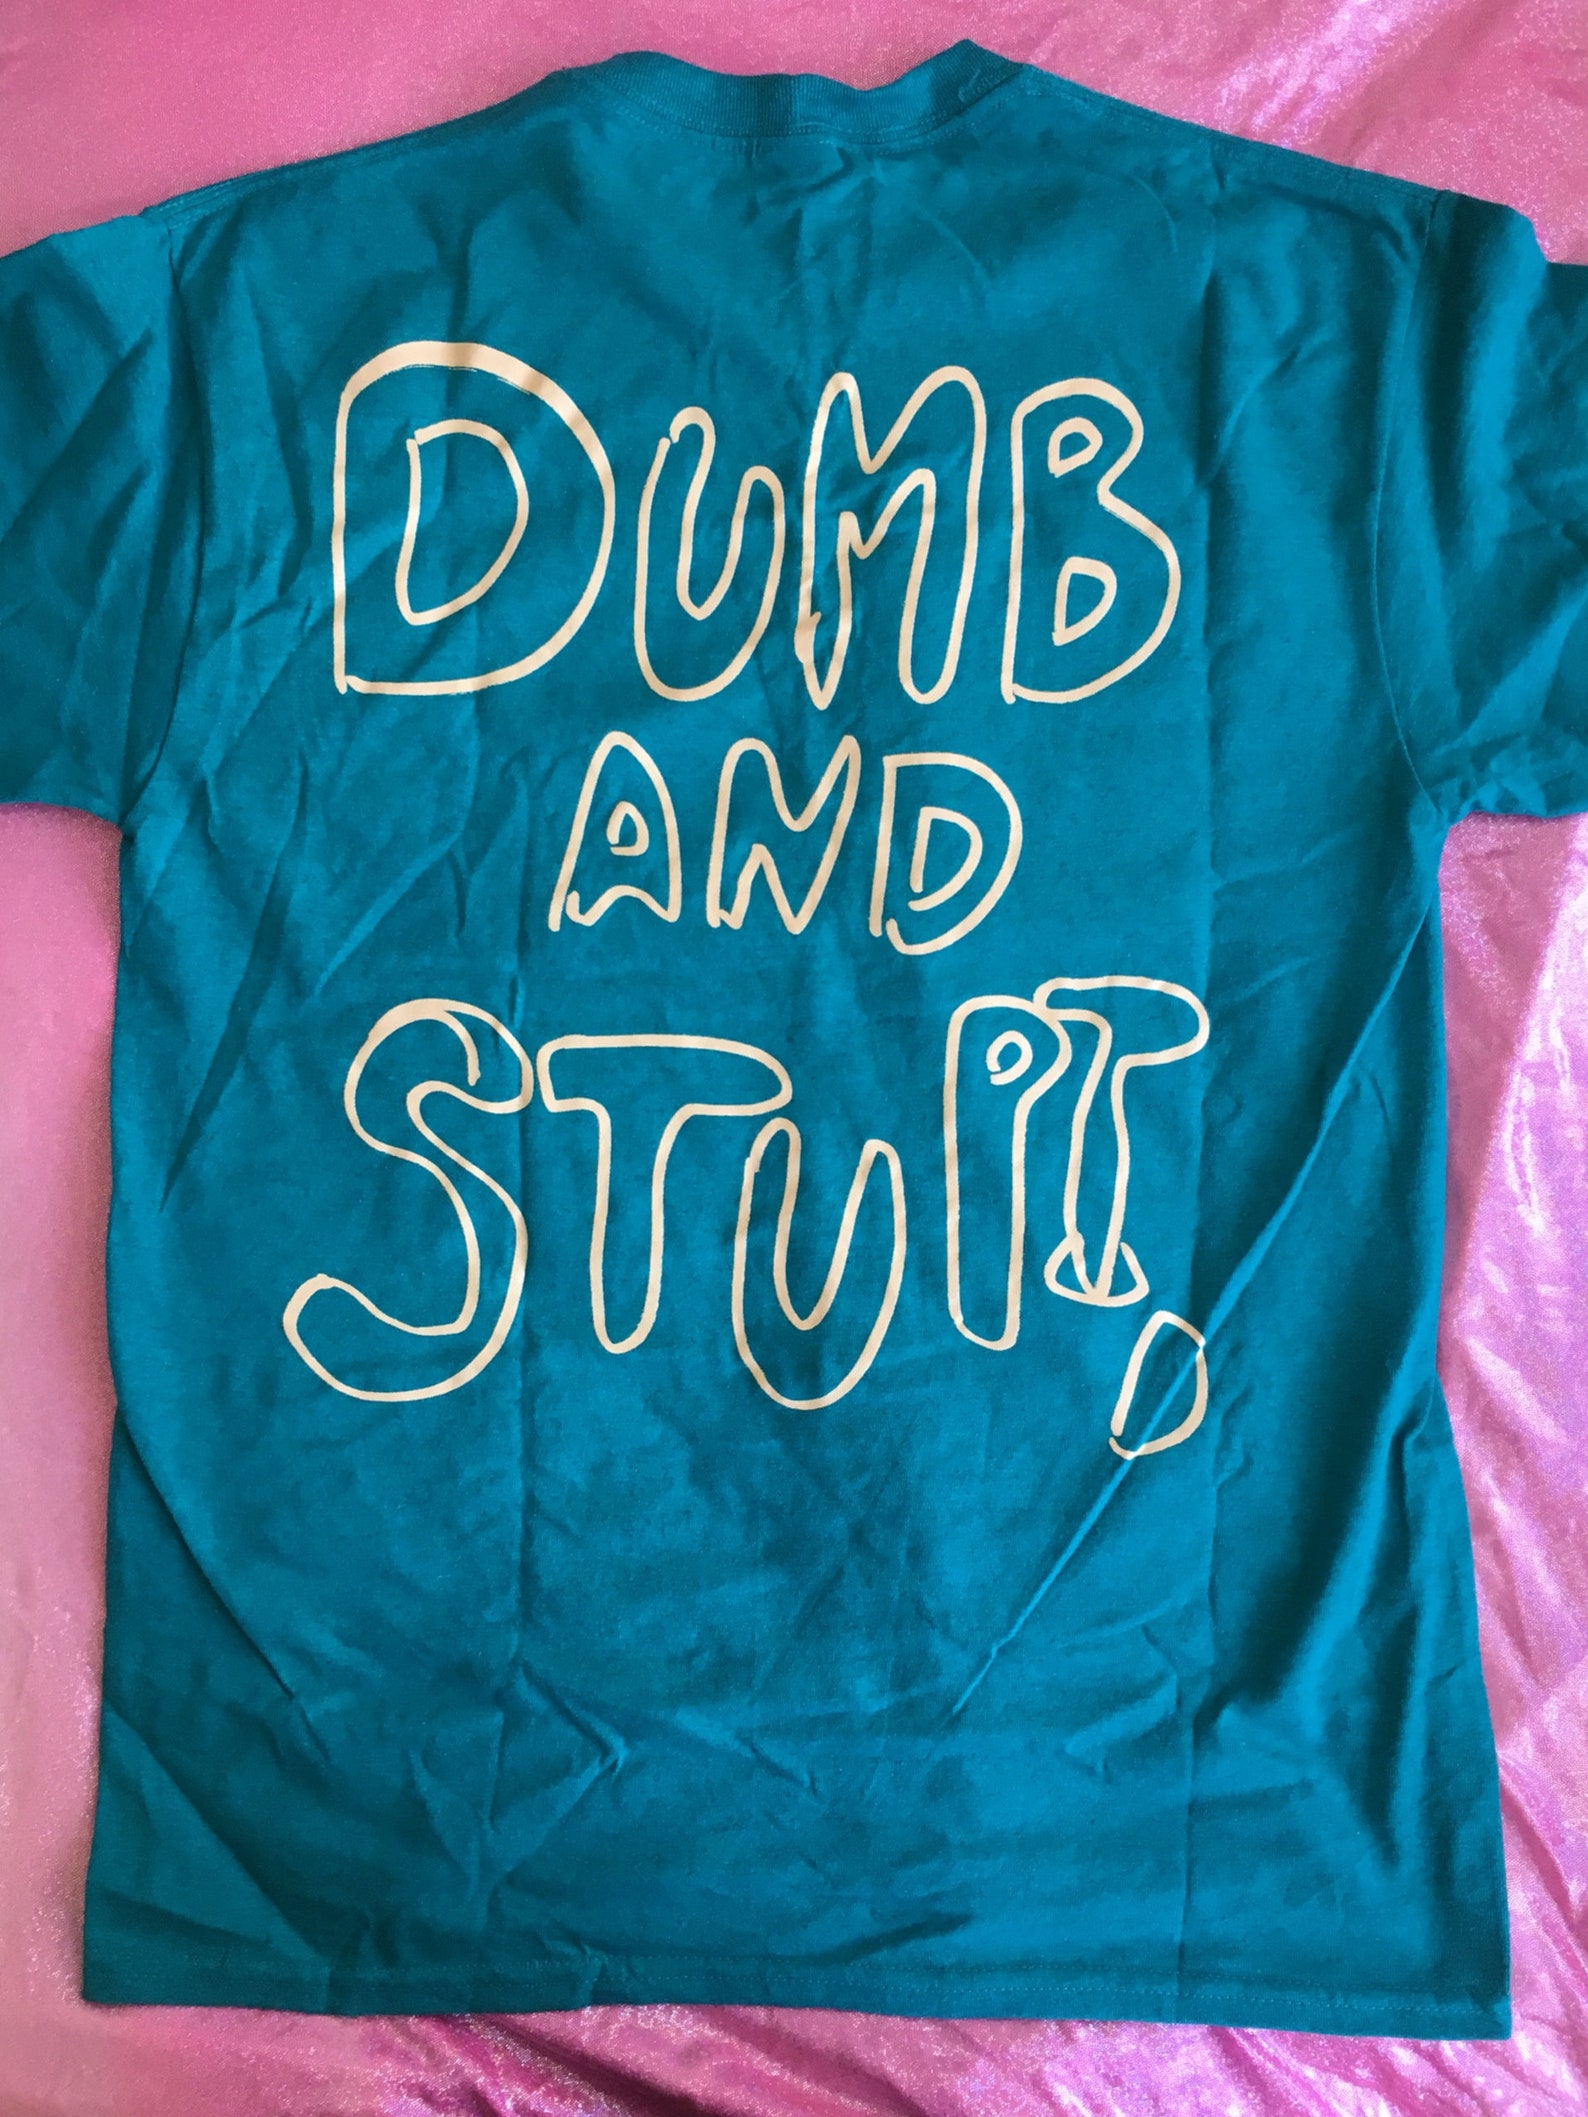 BOYS DUMB and STUPID blue shirt | Etsy